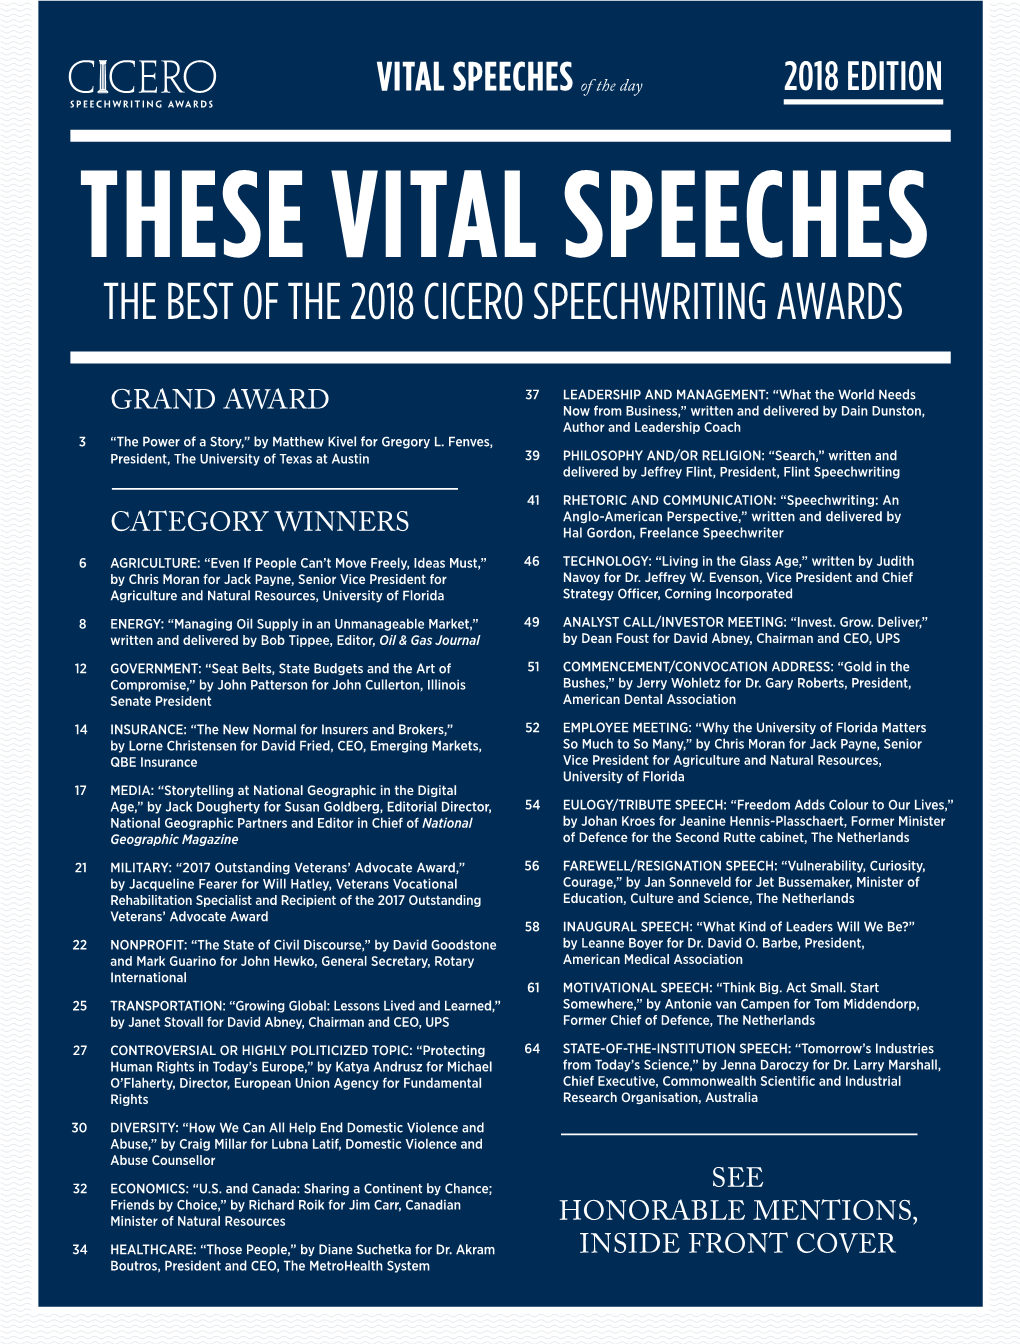 The Best of the 2018 Cicero Speechwriting Awards